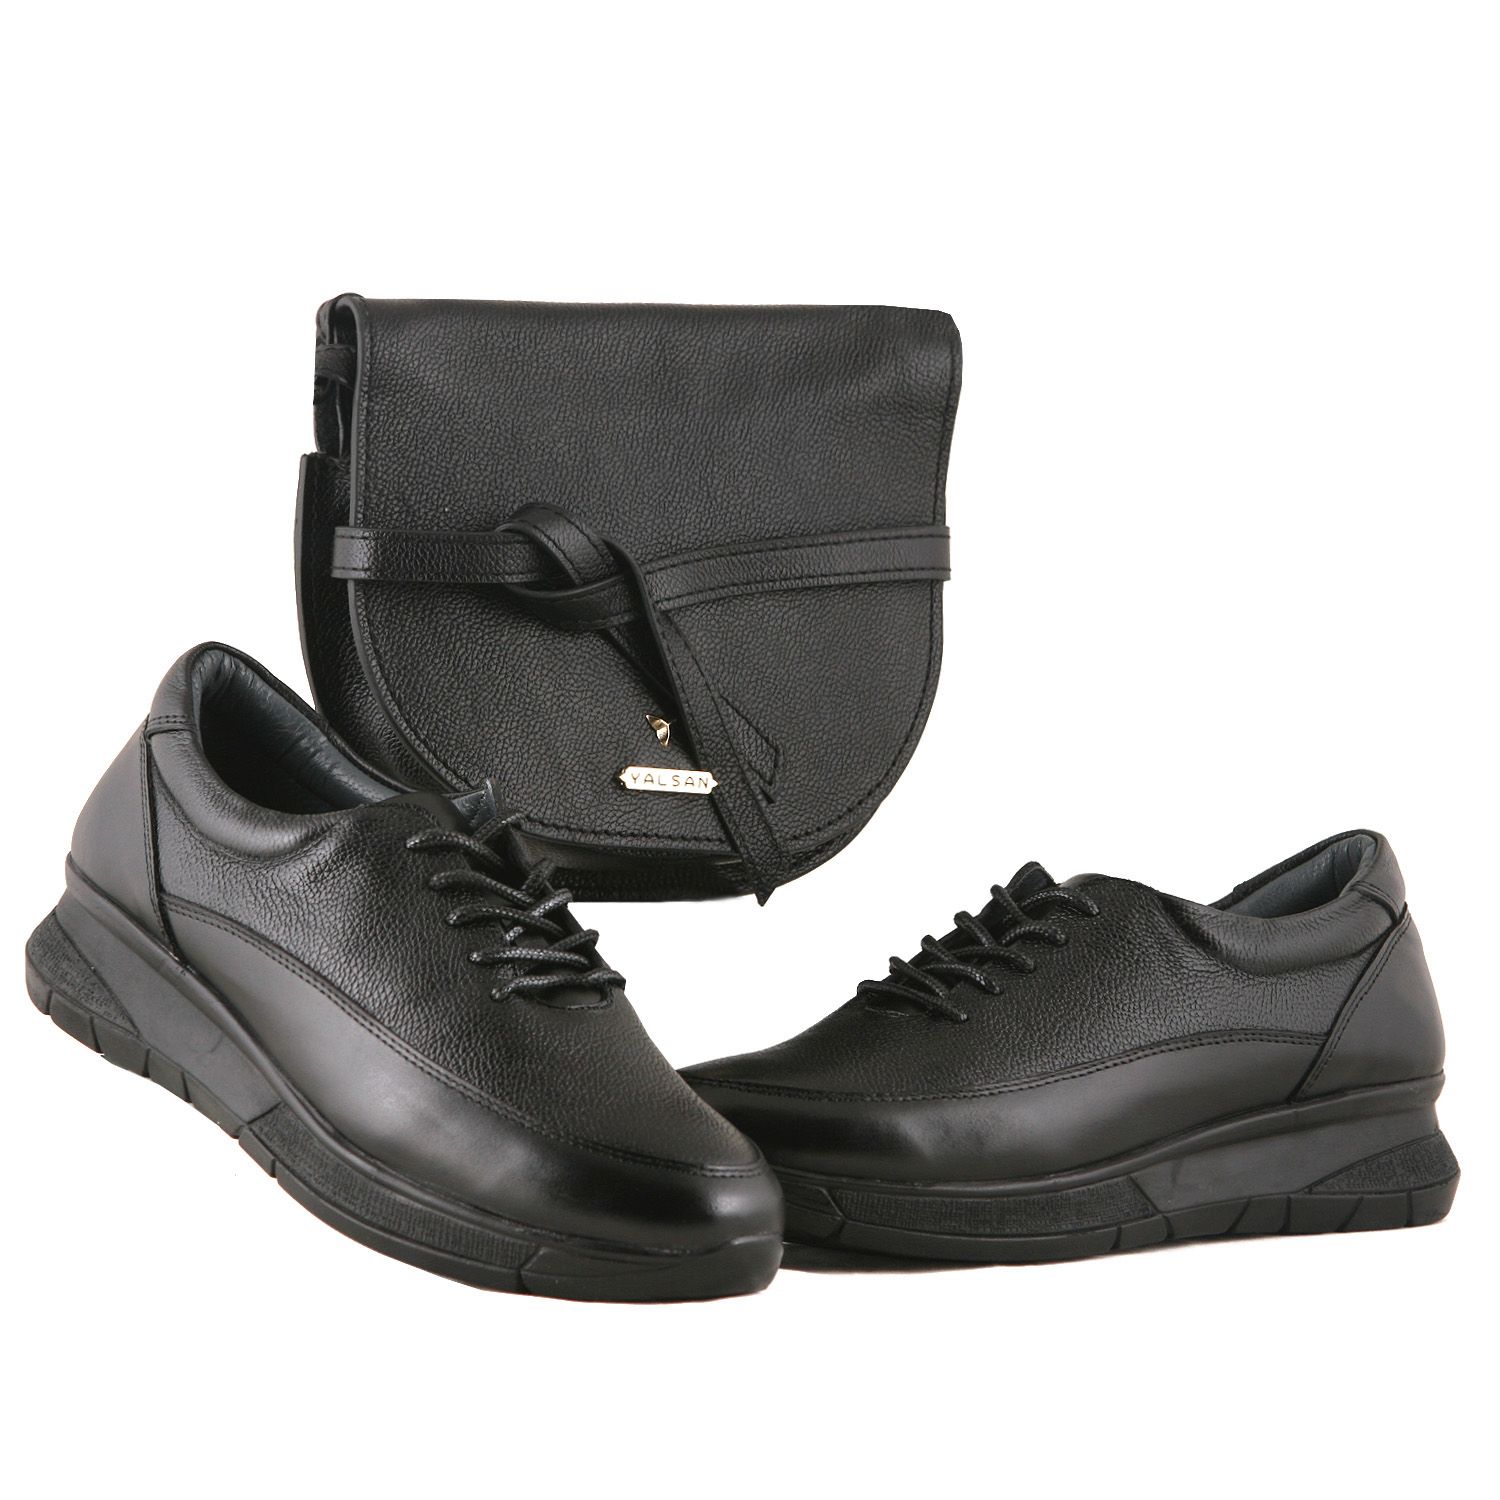 ست کیف و کفش زنانه چرم یلسان مدل برکه کد RUFIYA-MC-932-msk -  - 2